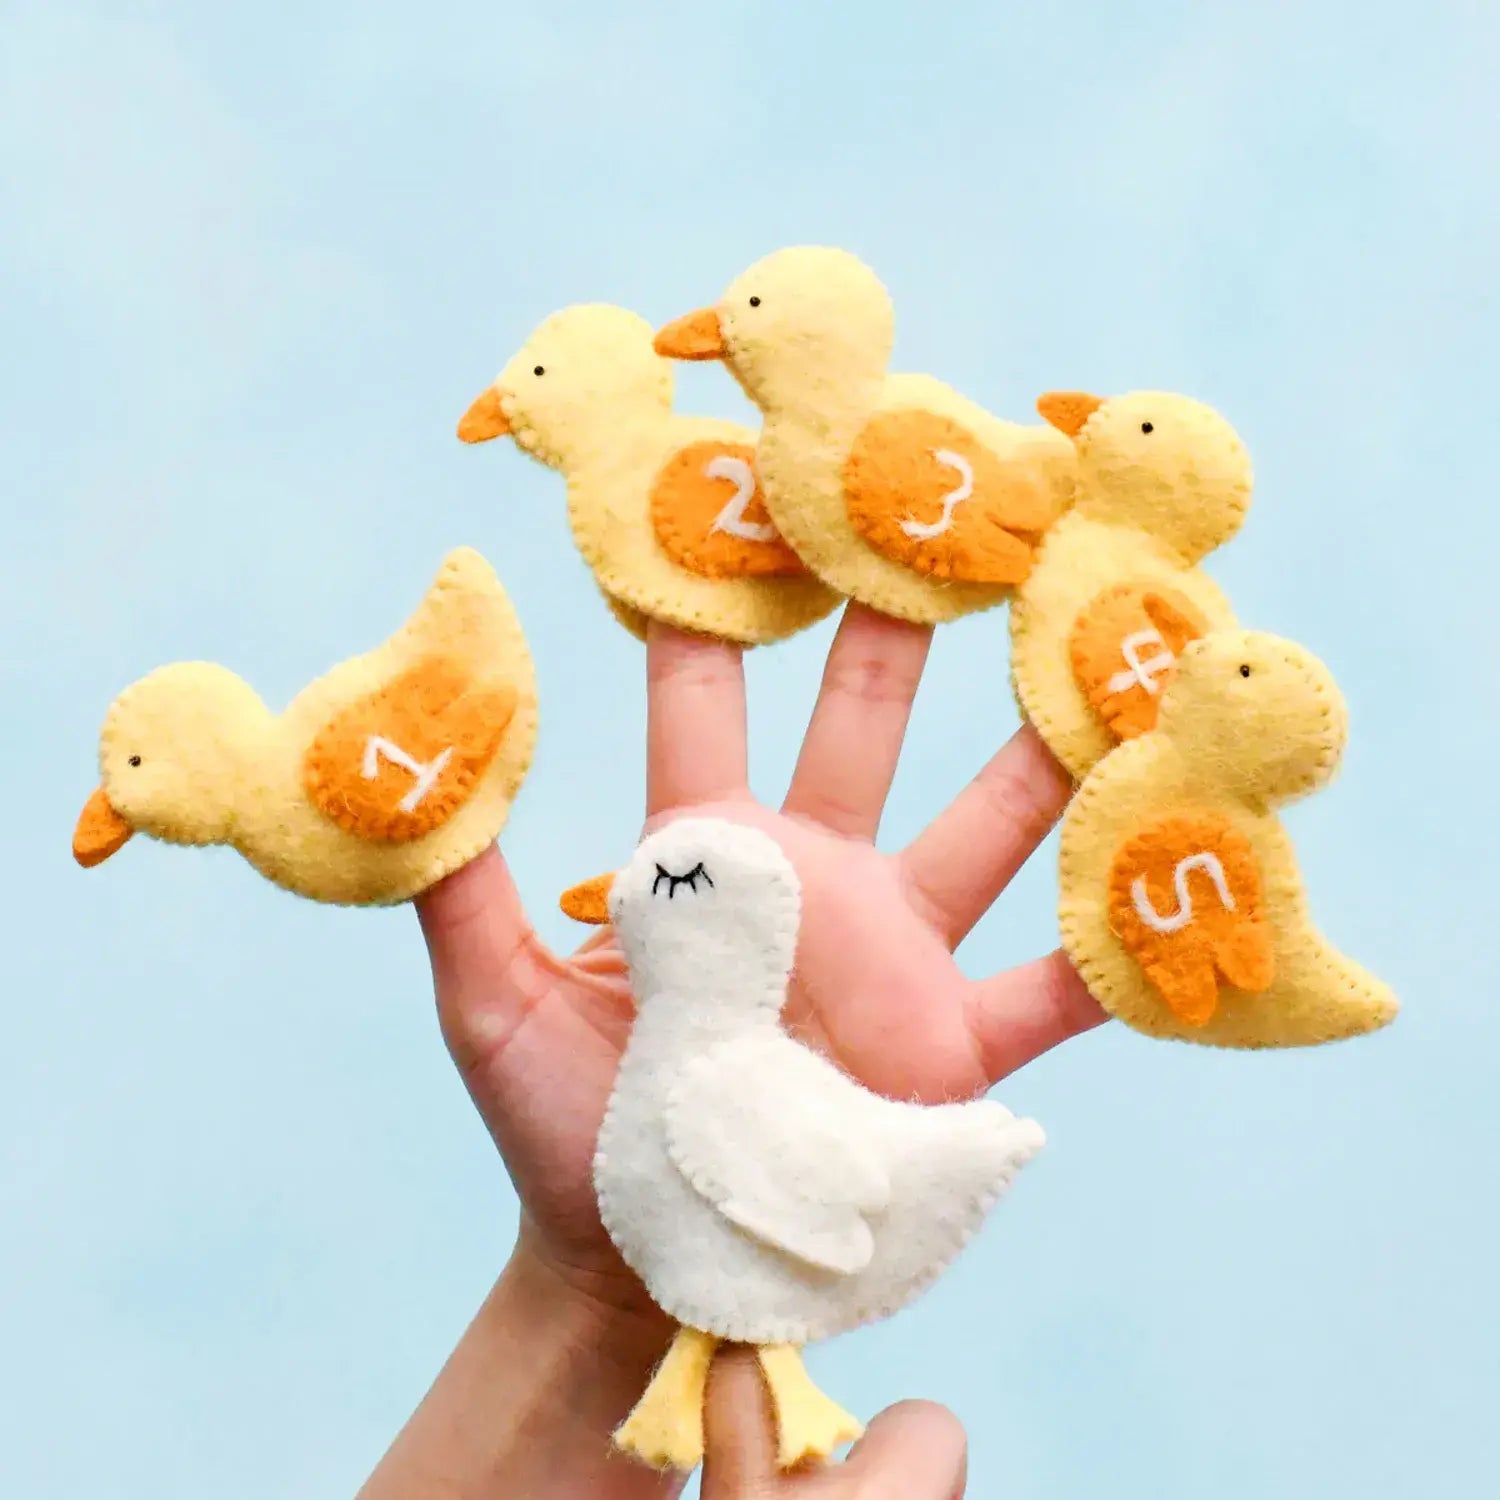 Five Little Ducks Finger Puppet Set by Tara Treasures